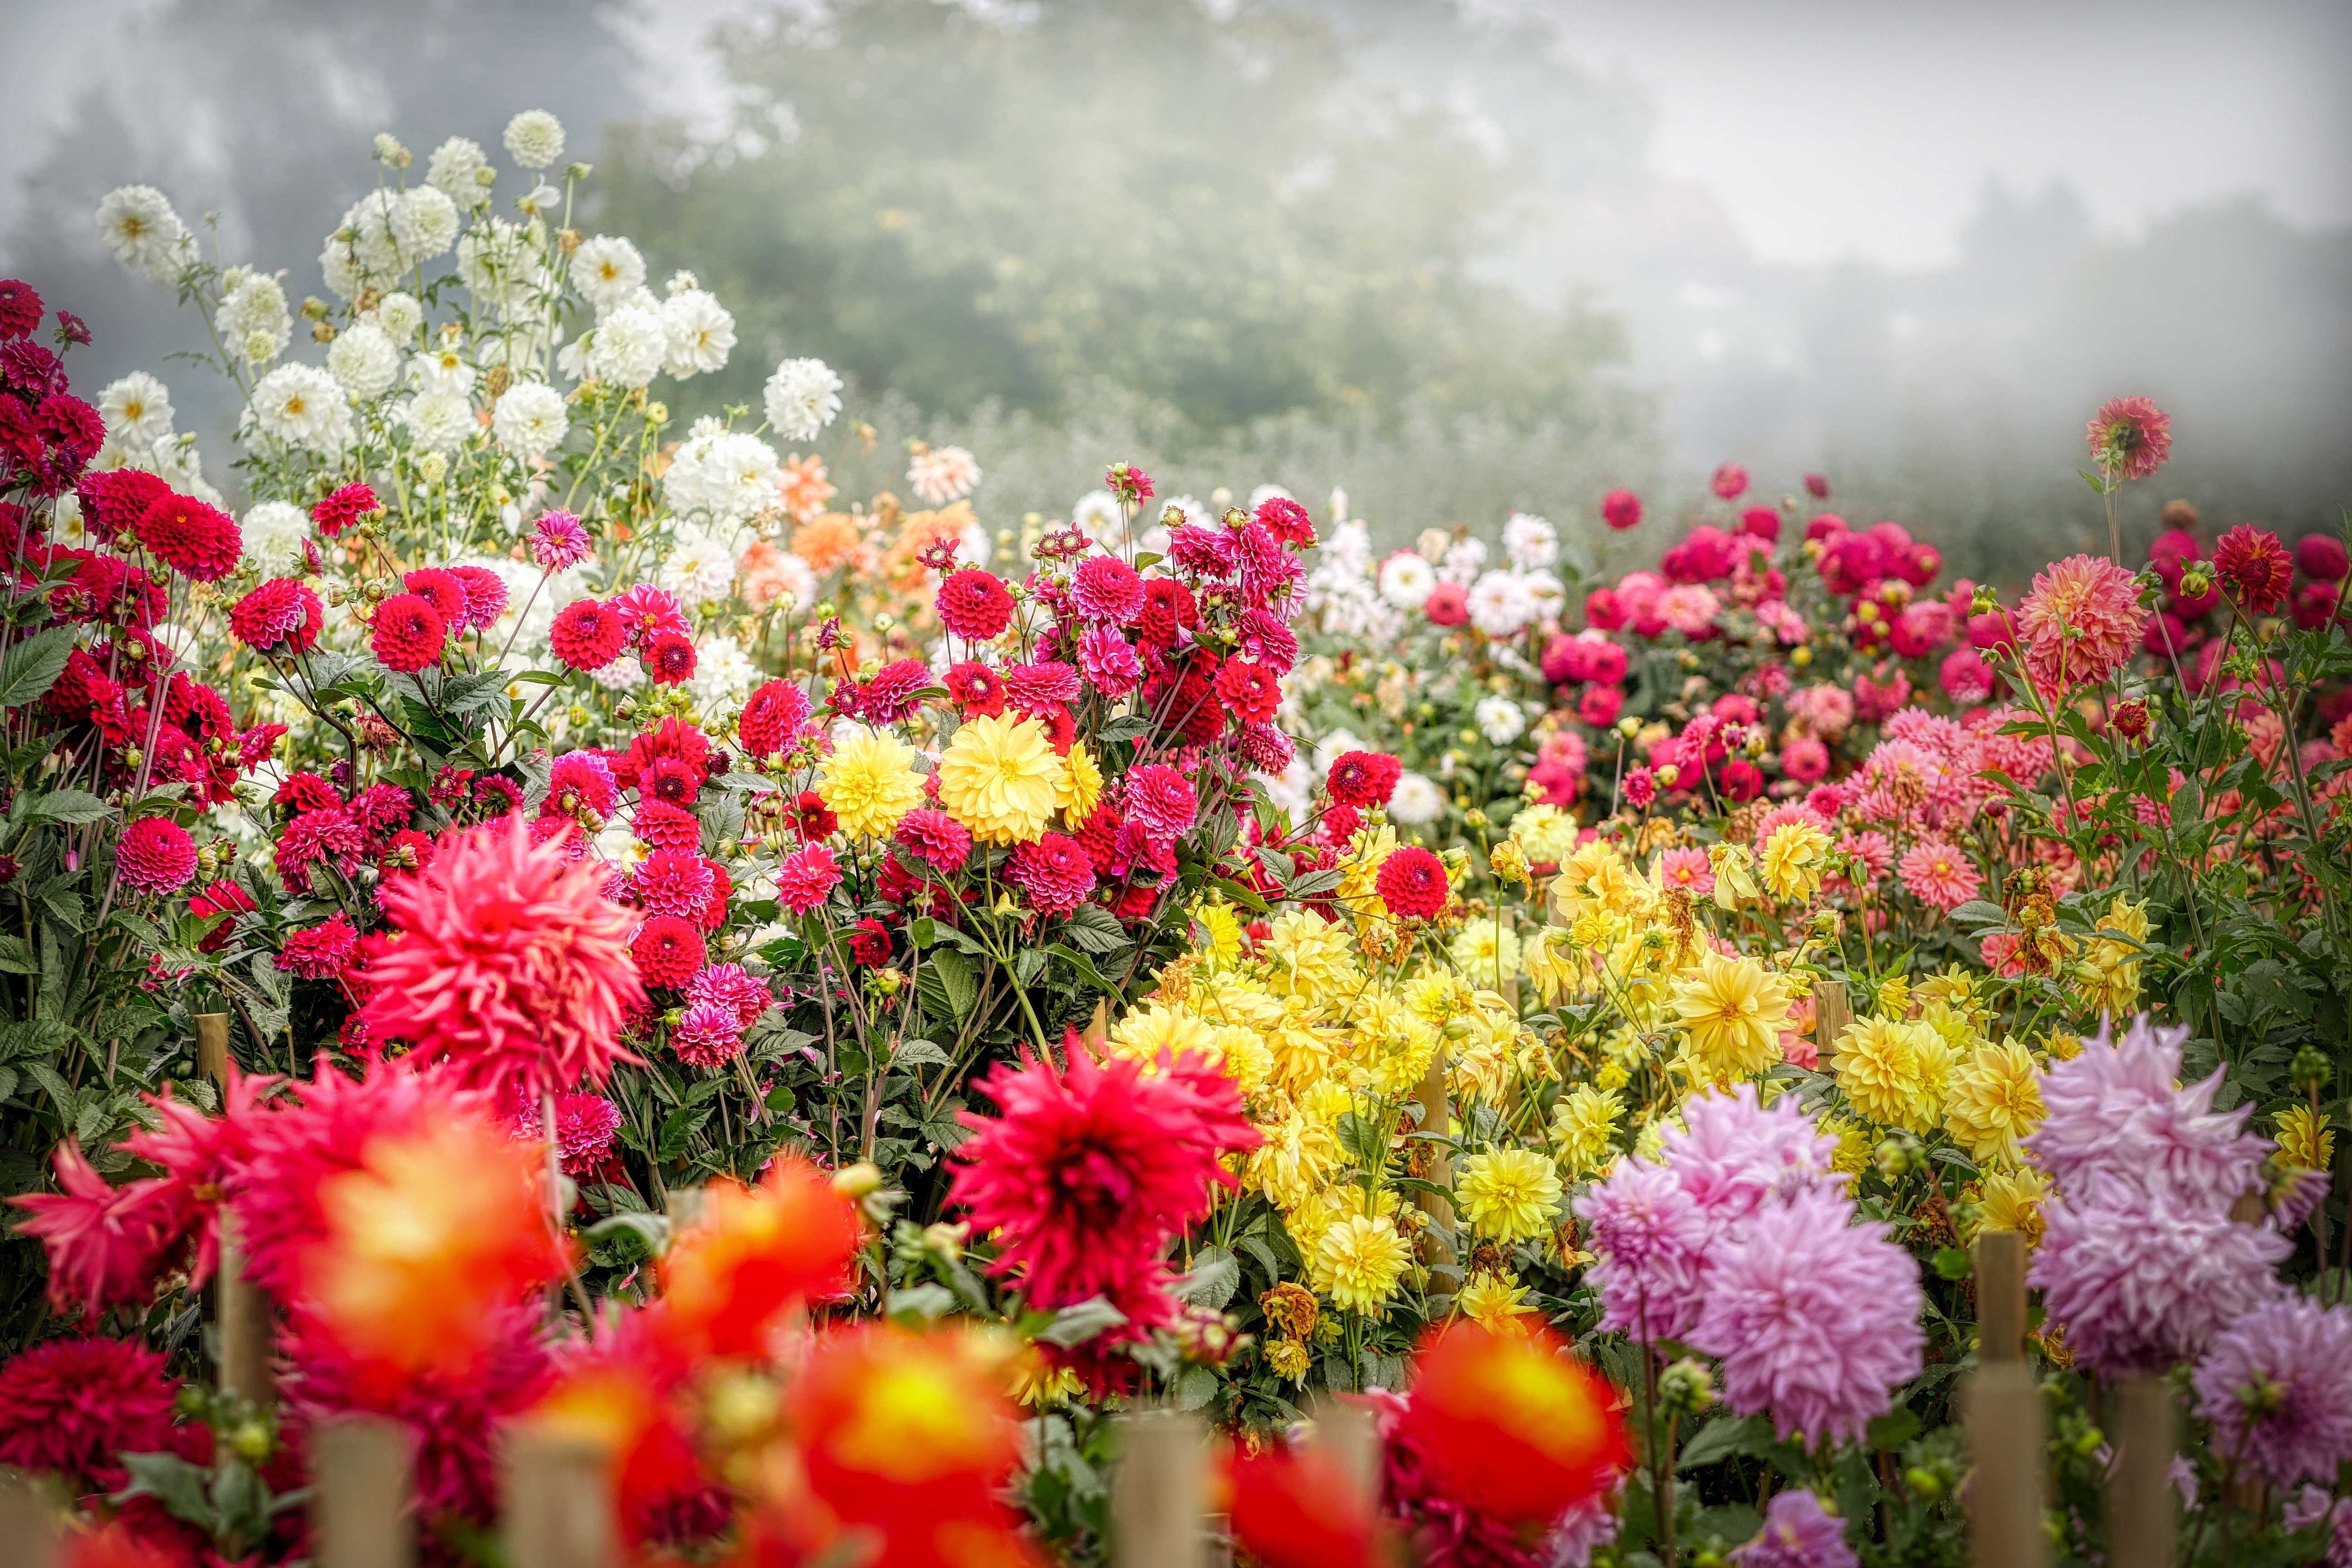 HD wallpaper, Flower Garden, 5K, Floral Background, Blossom, Dahlia Flower, Bloom, Colorful, Fog